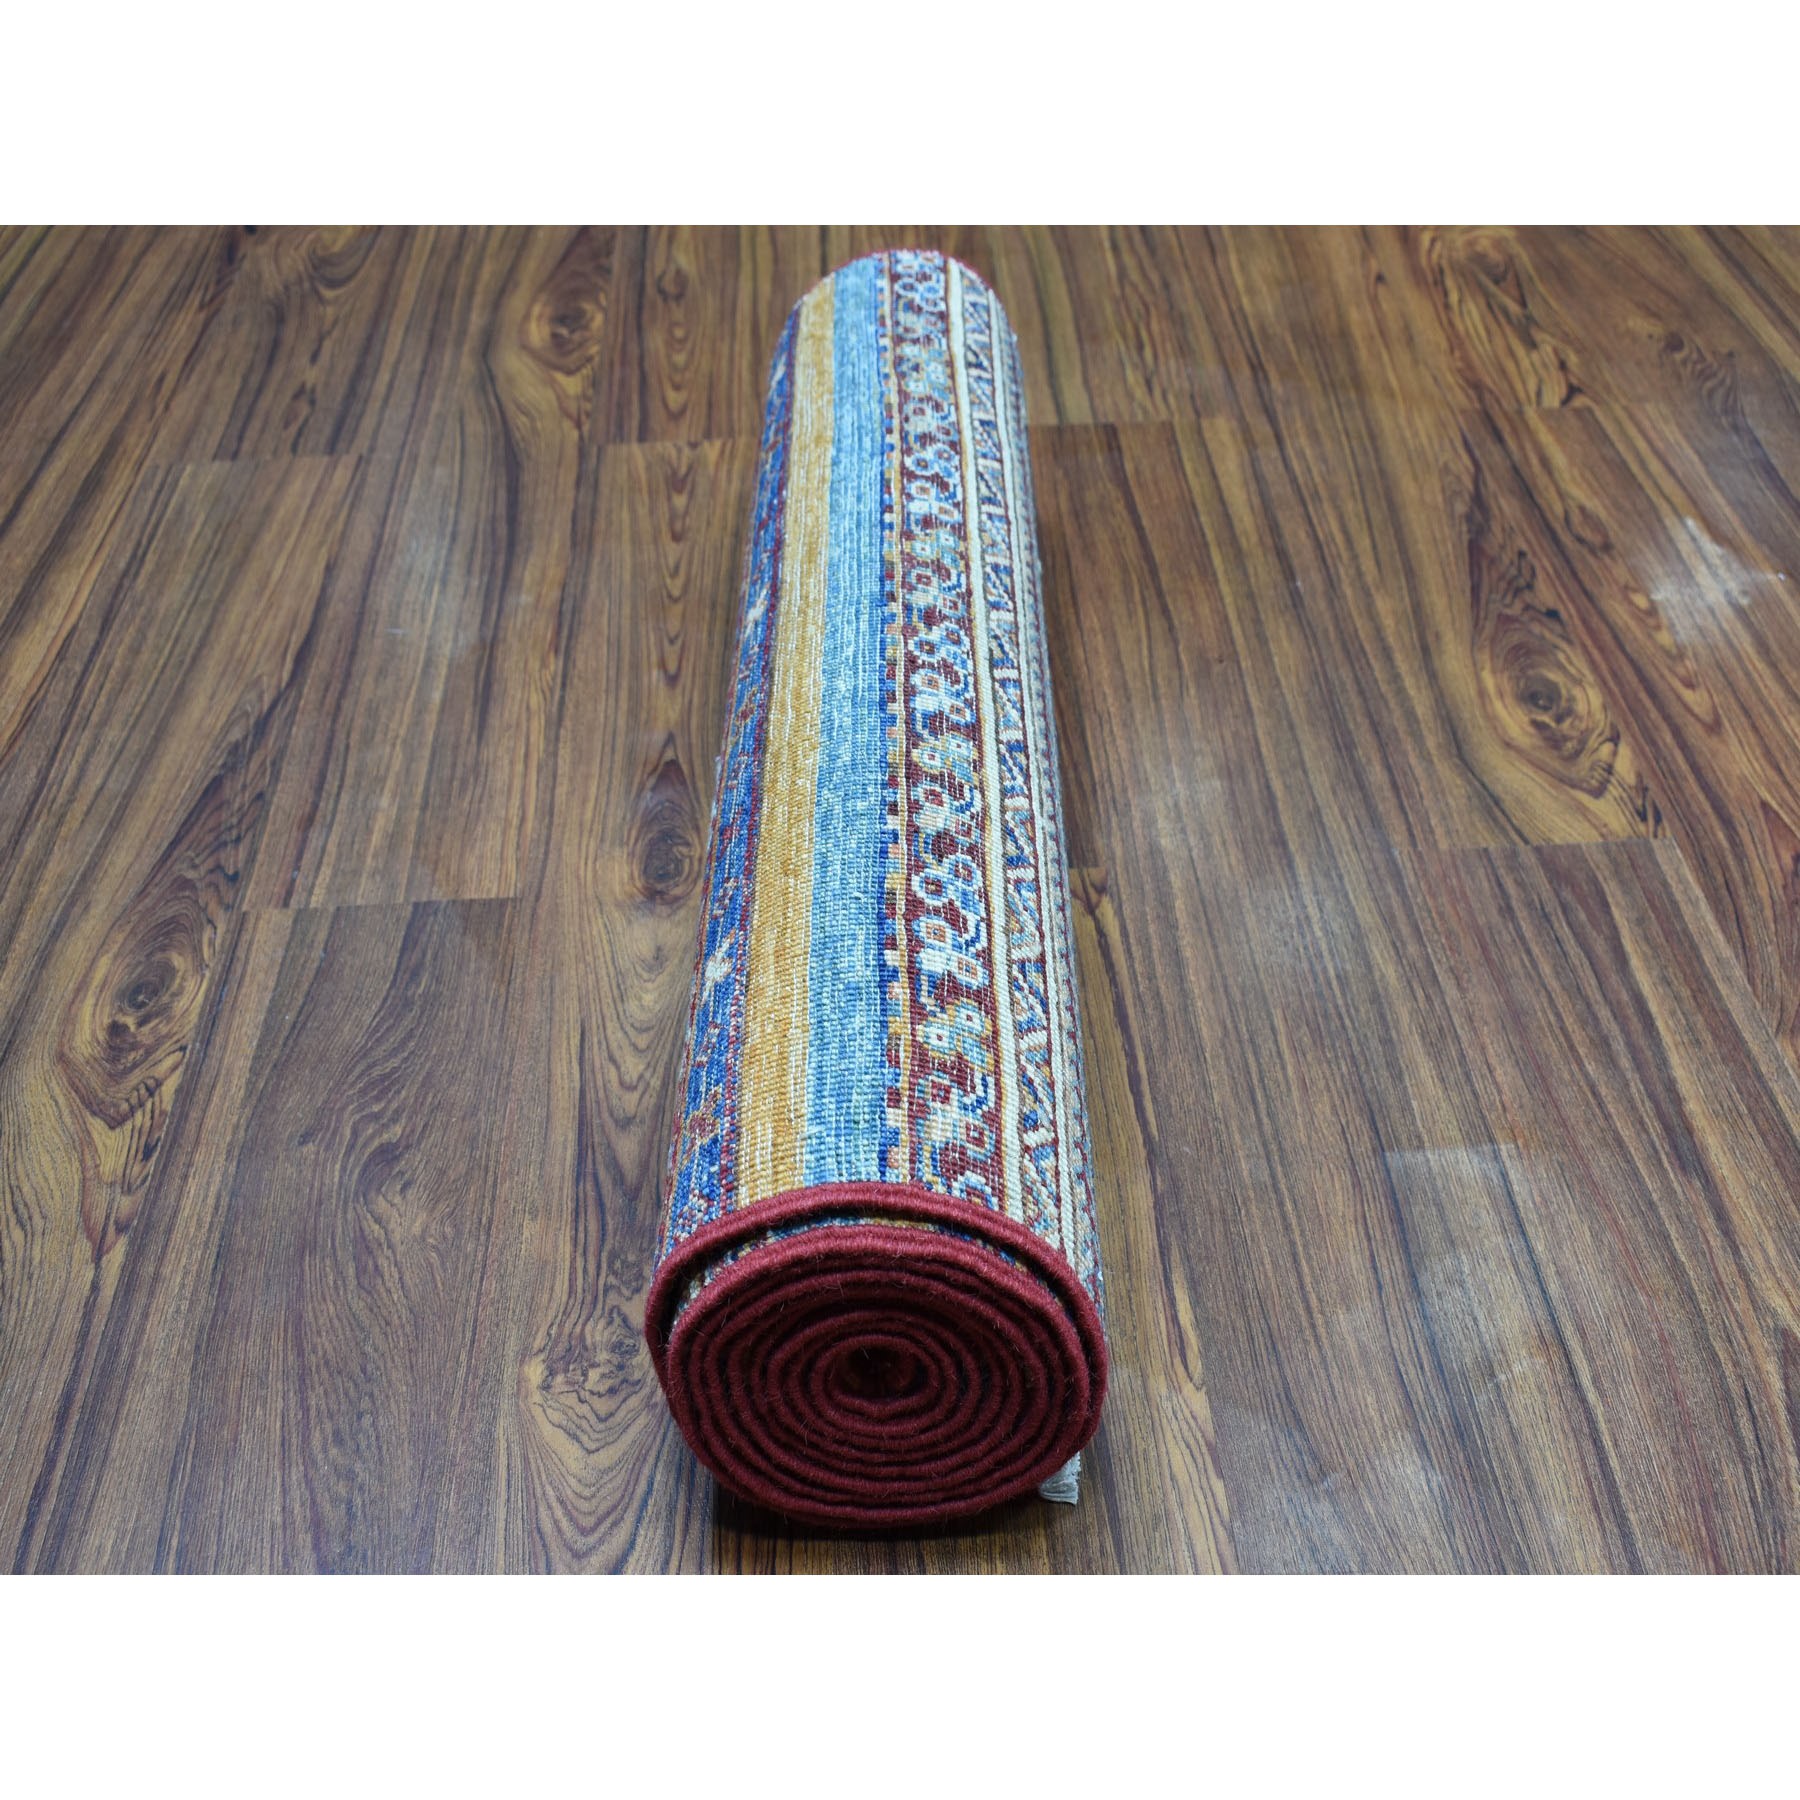 2-3 x9-7  Khorjin Design Colorful Runner Super Kazak Pure Wool Hand Knotted Oriental Rug 